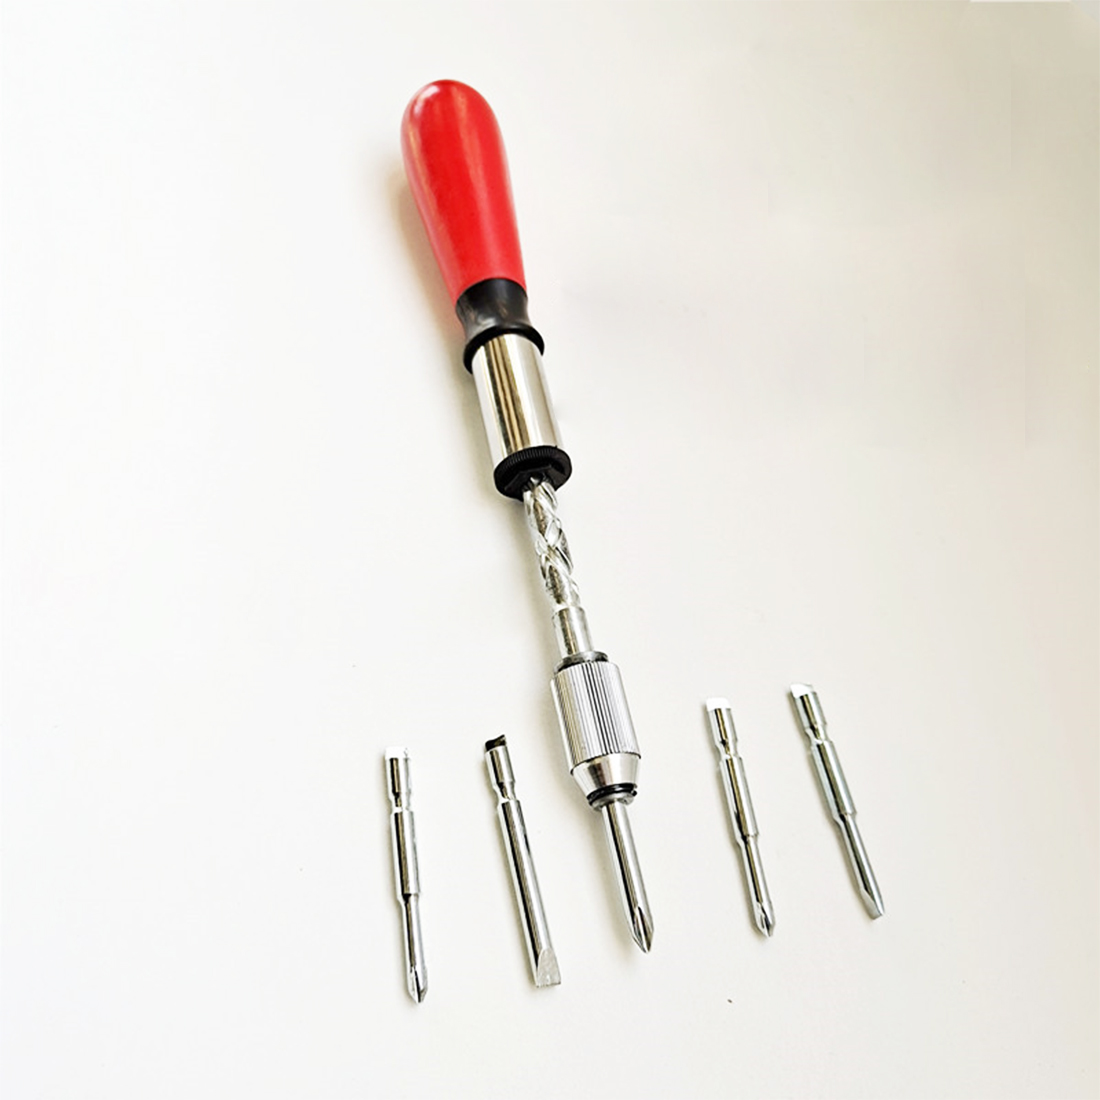 Semi-automatic screwdriver